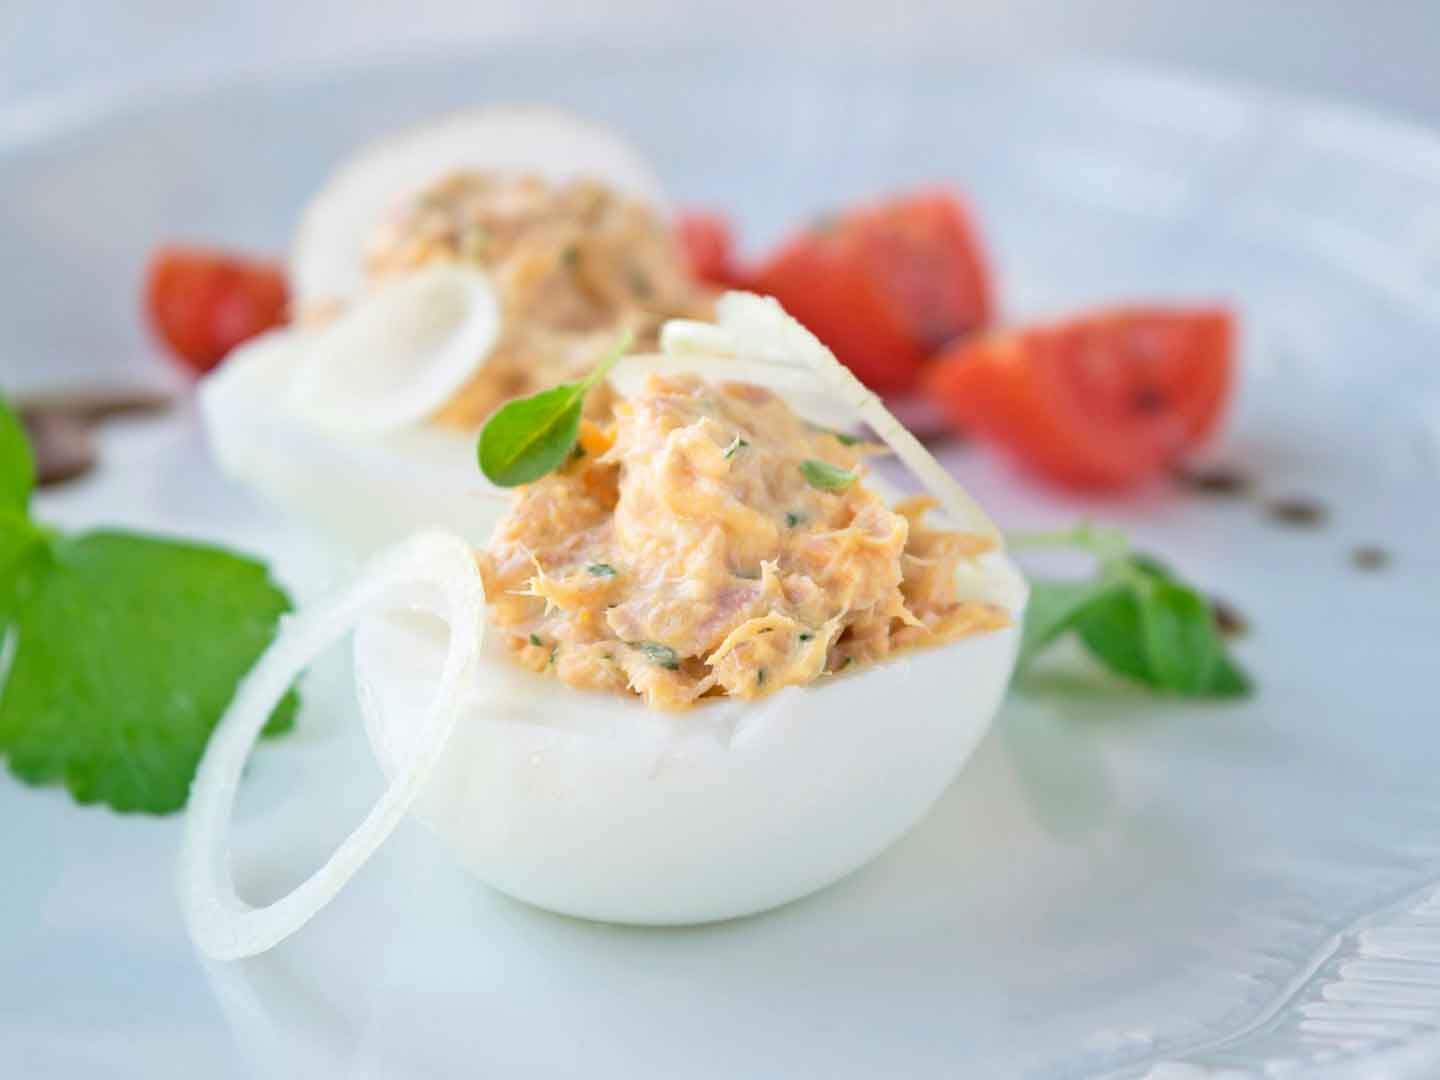 Huevos rellenos de Atun y Tomate Receta de aperitivos muy facil